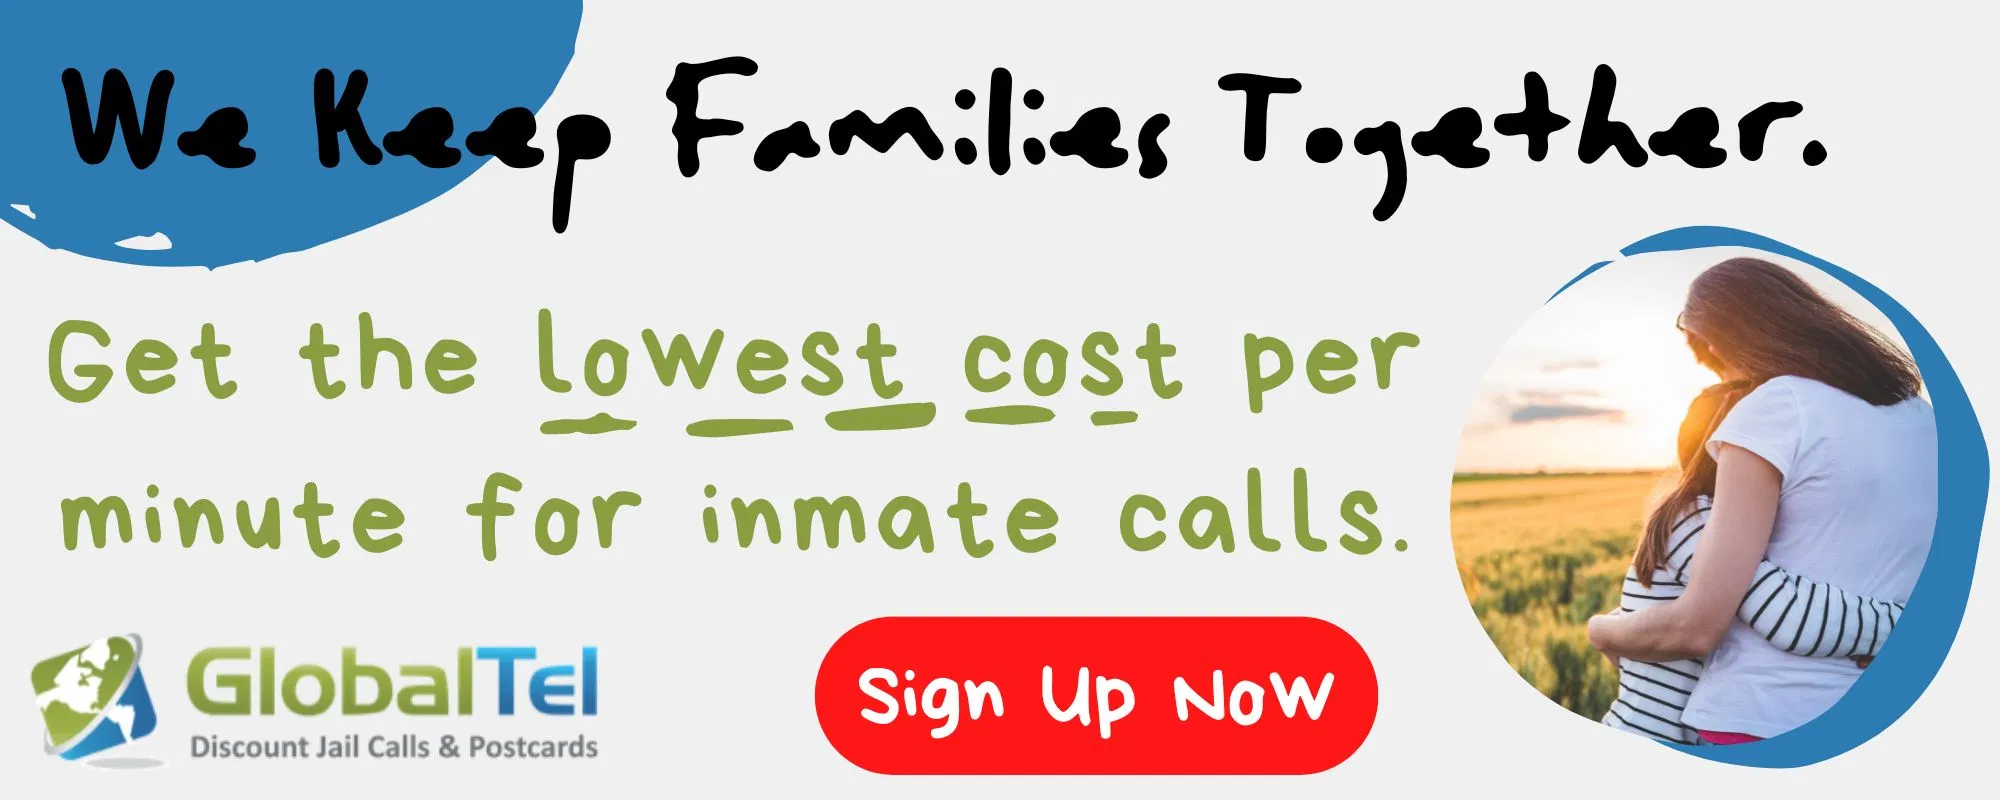 GlobalTel inmate calling service